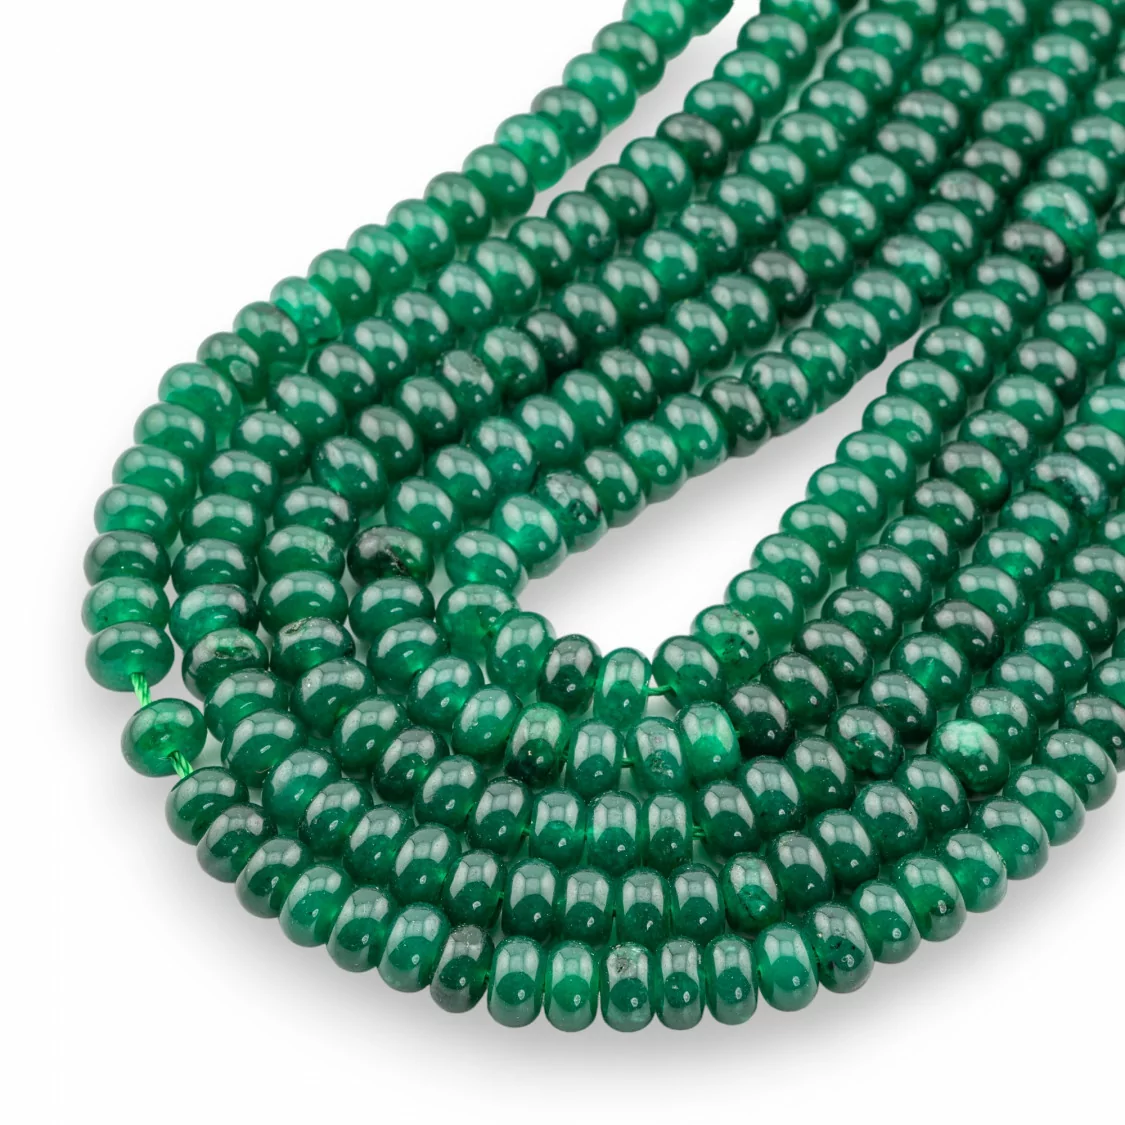 Giada Linea Economica Rondelle Lisce 8x5mm Verde Smeraldo-GIADA TURCHESE | Worldofjewel.com